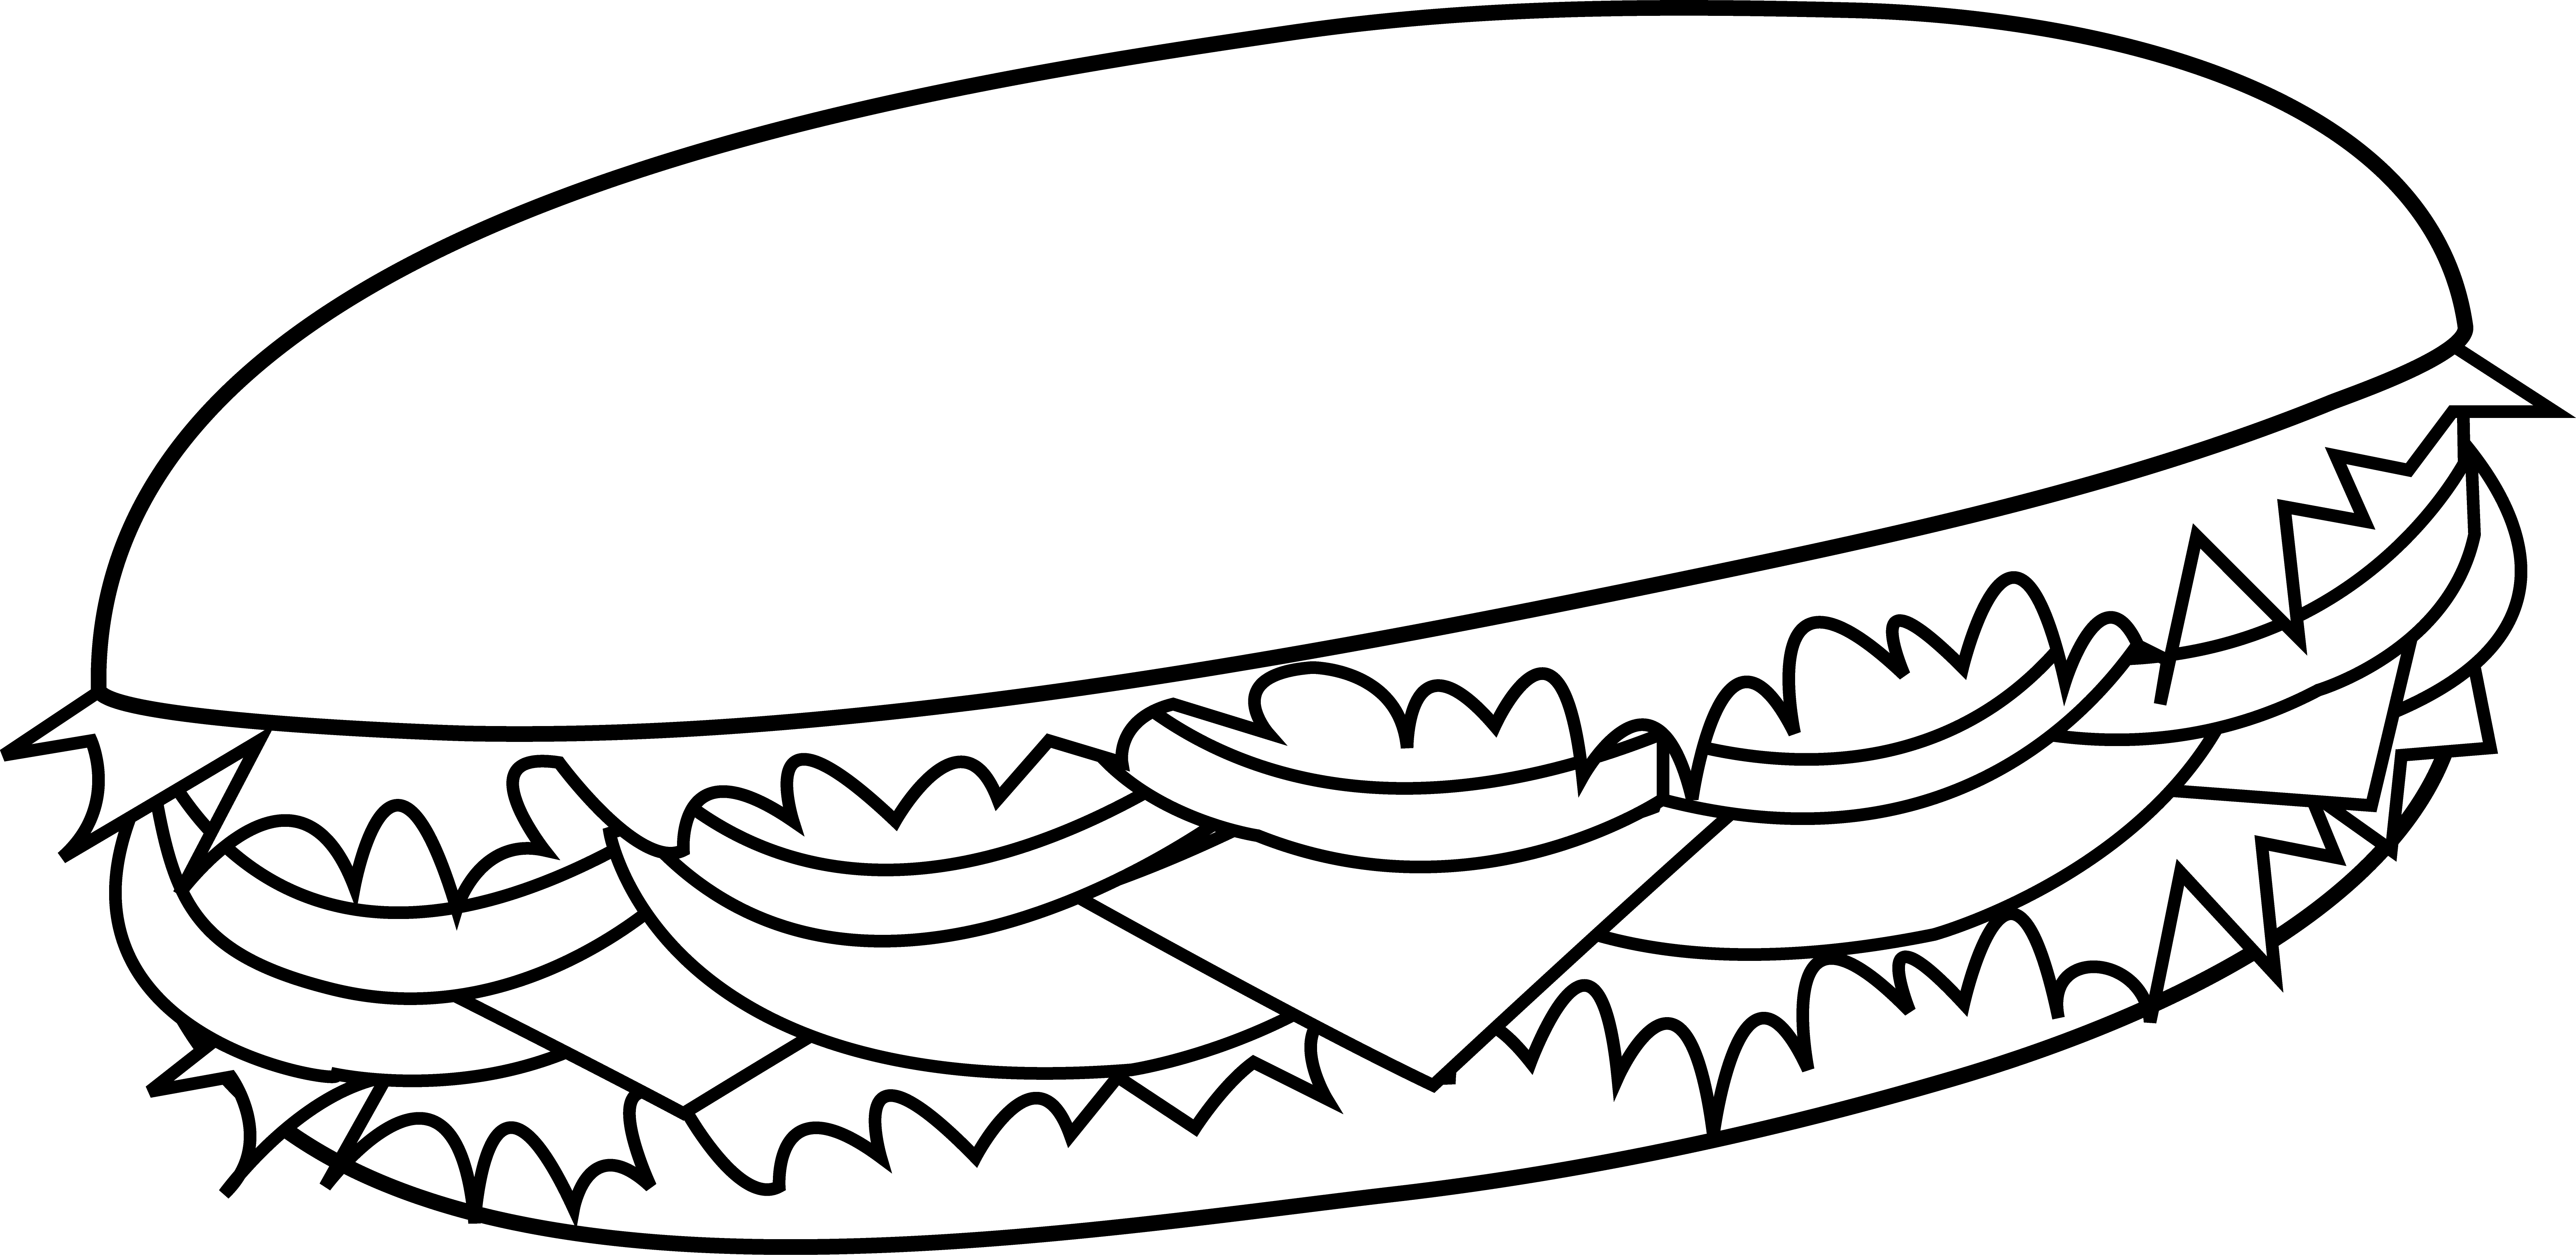 Images For > Meatball Sub Sandwich Cartoon